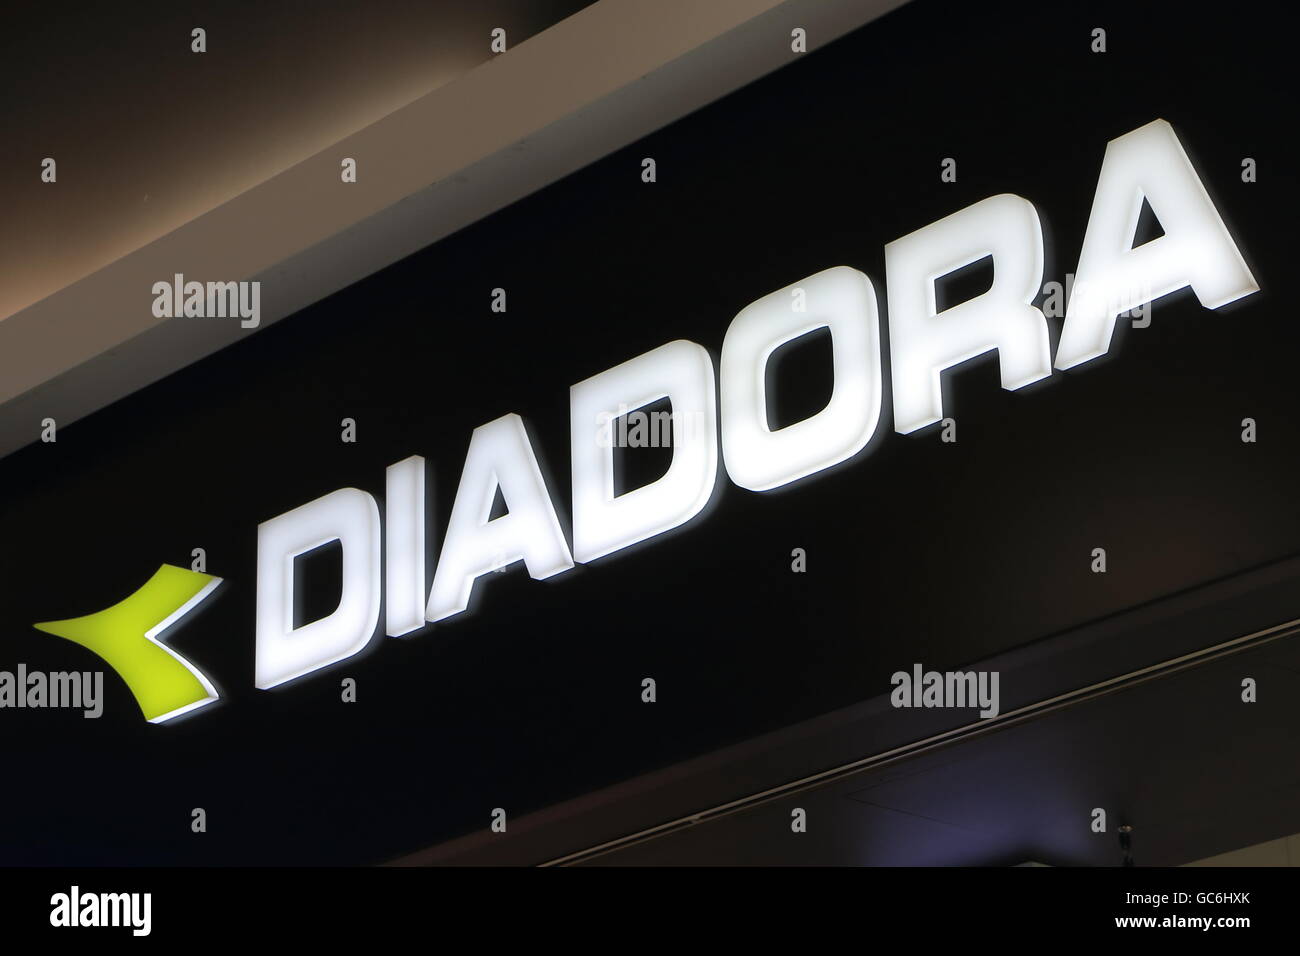 Diadora -Fotos und -Bildmaterial in hoher Auflösung – Alamy